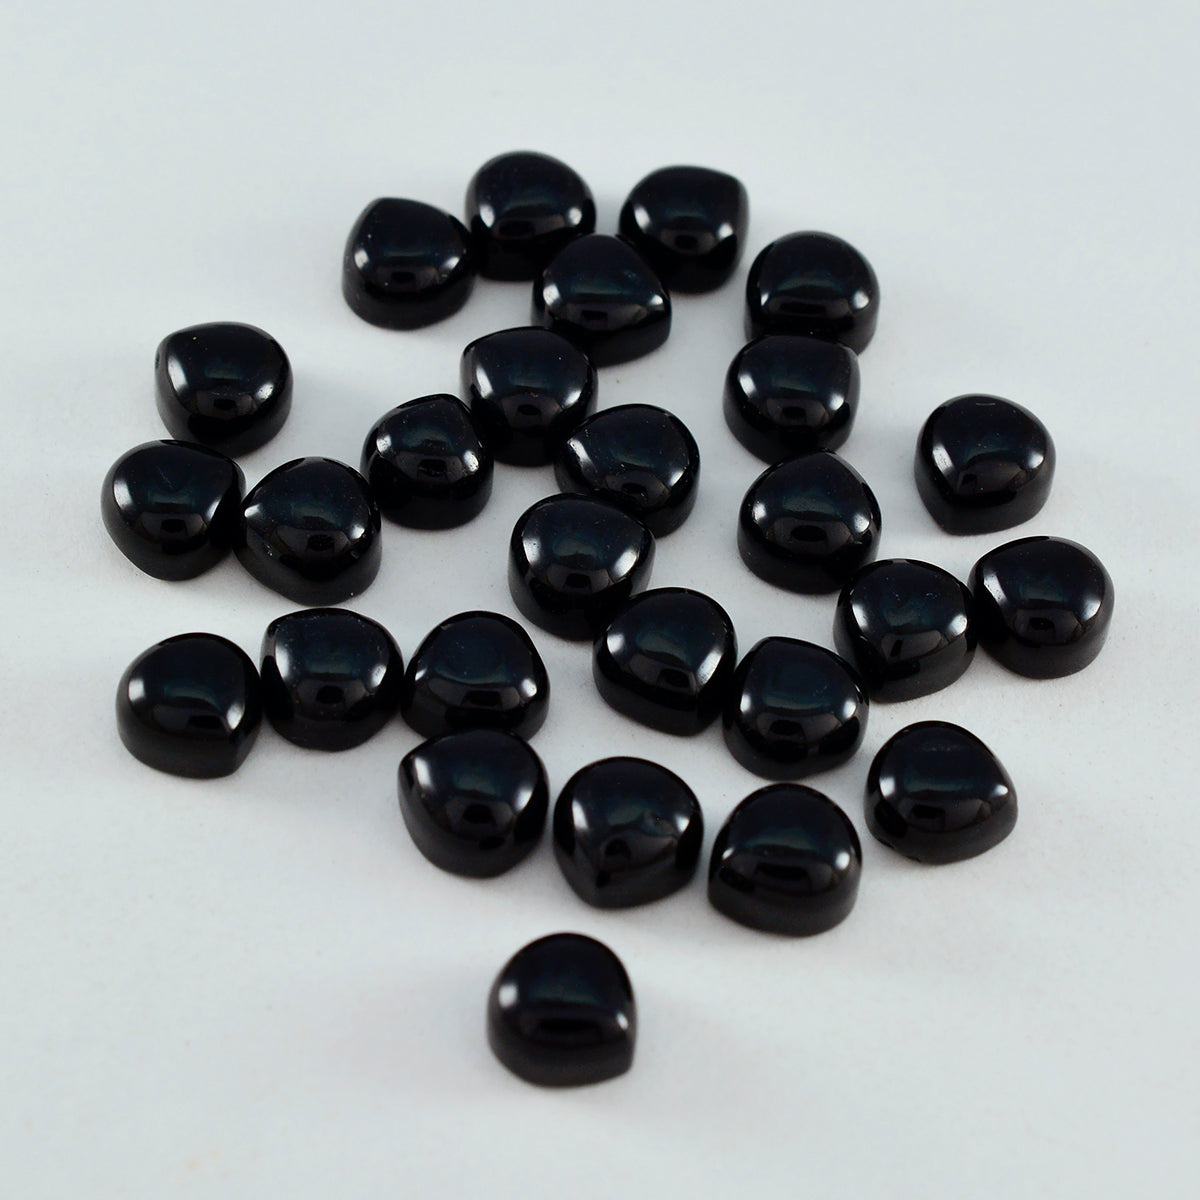 Riyogems 1PC Black Onyx Cabochon 5x5 mm hartvorm verrassende kwaliteit losse edelstenen